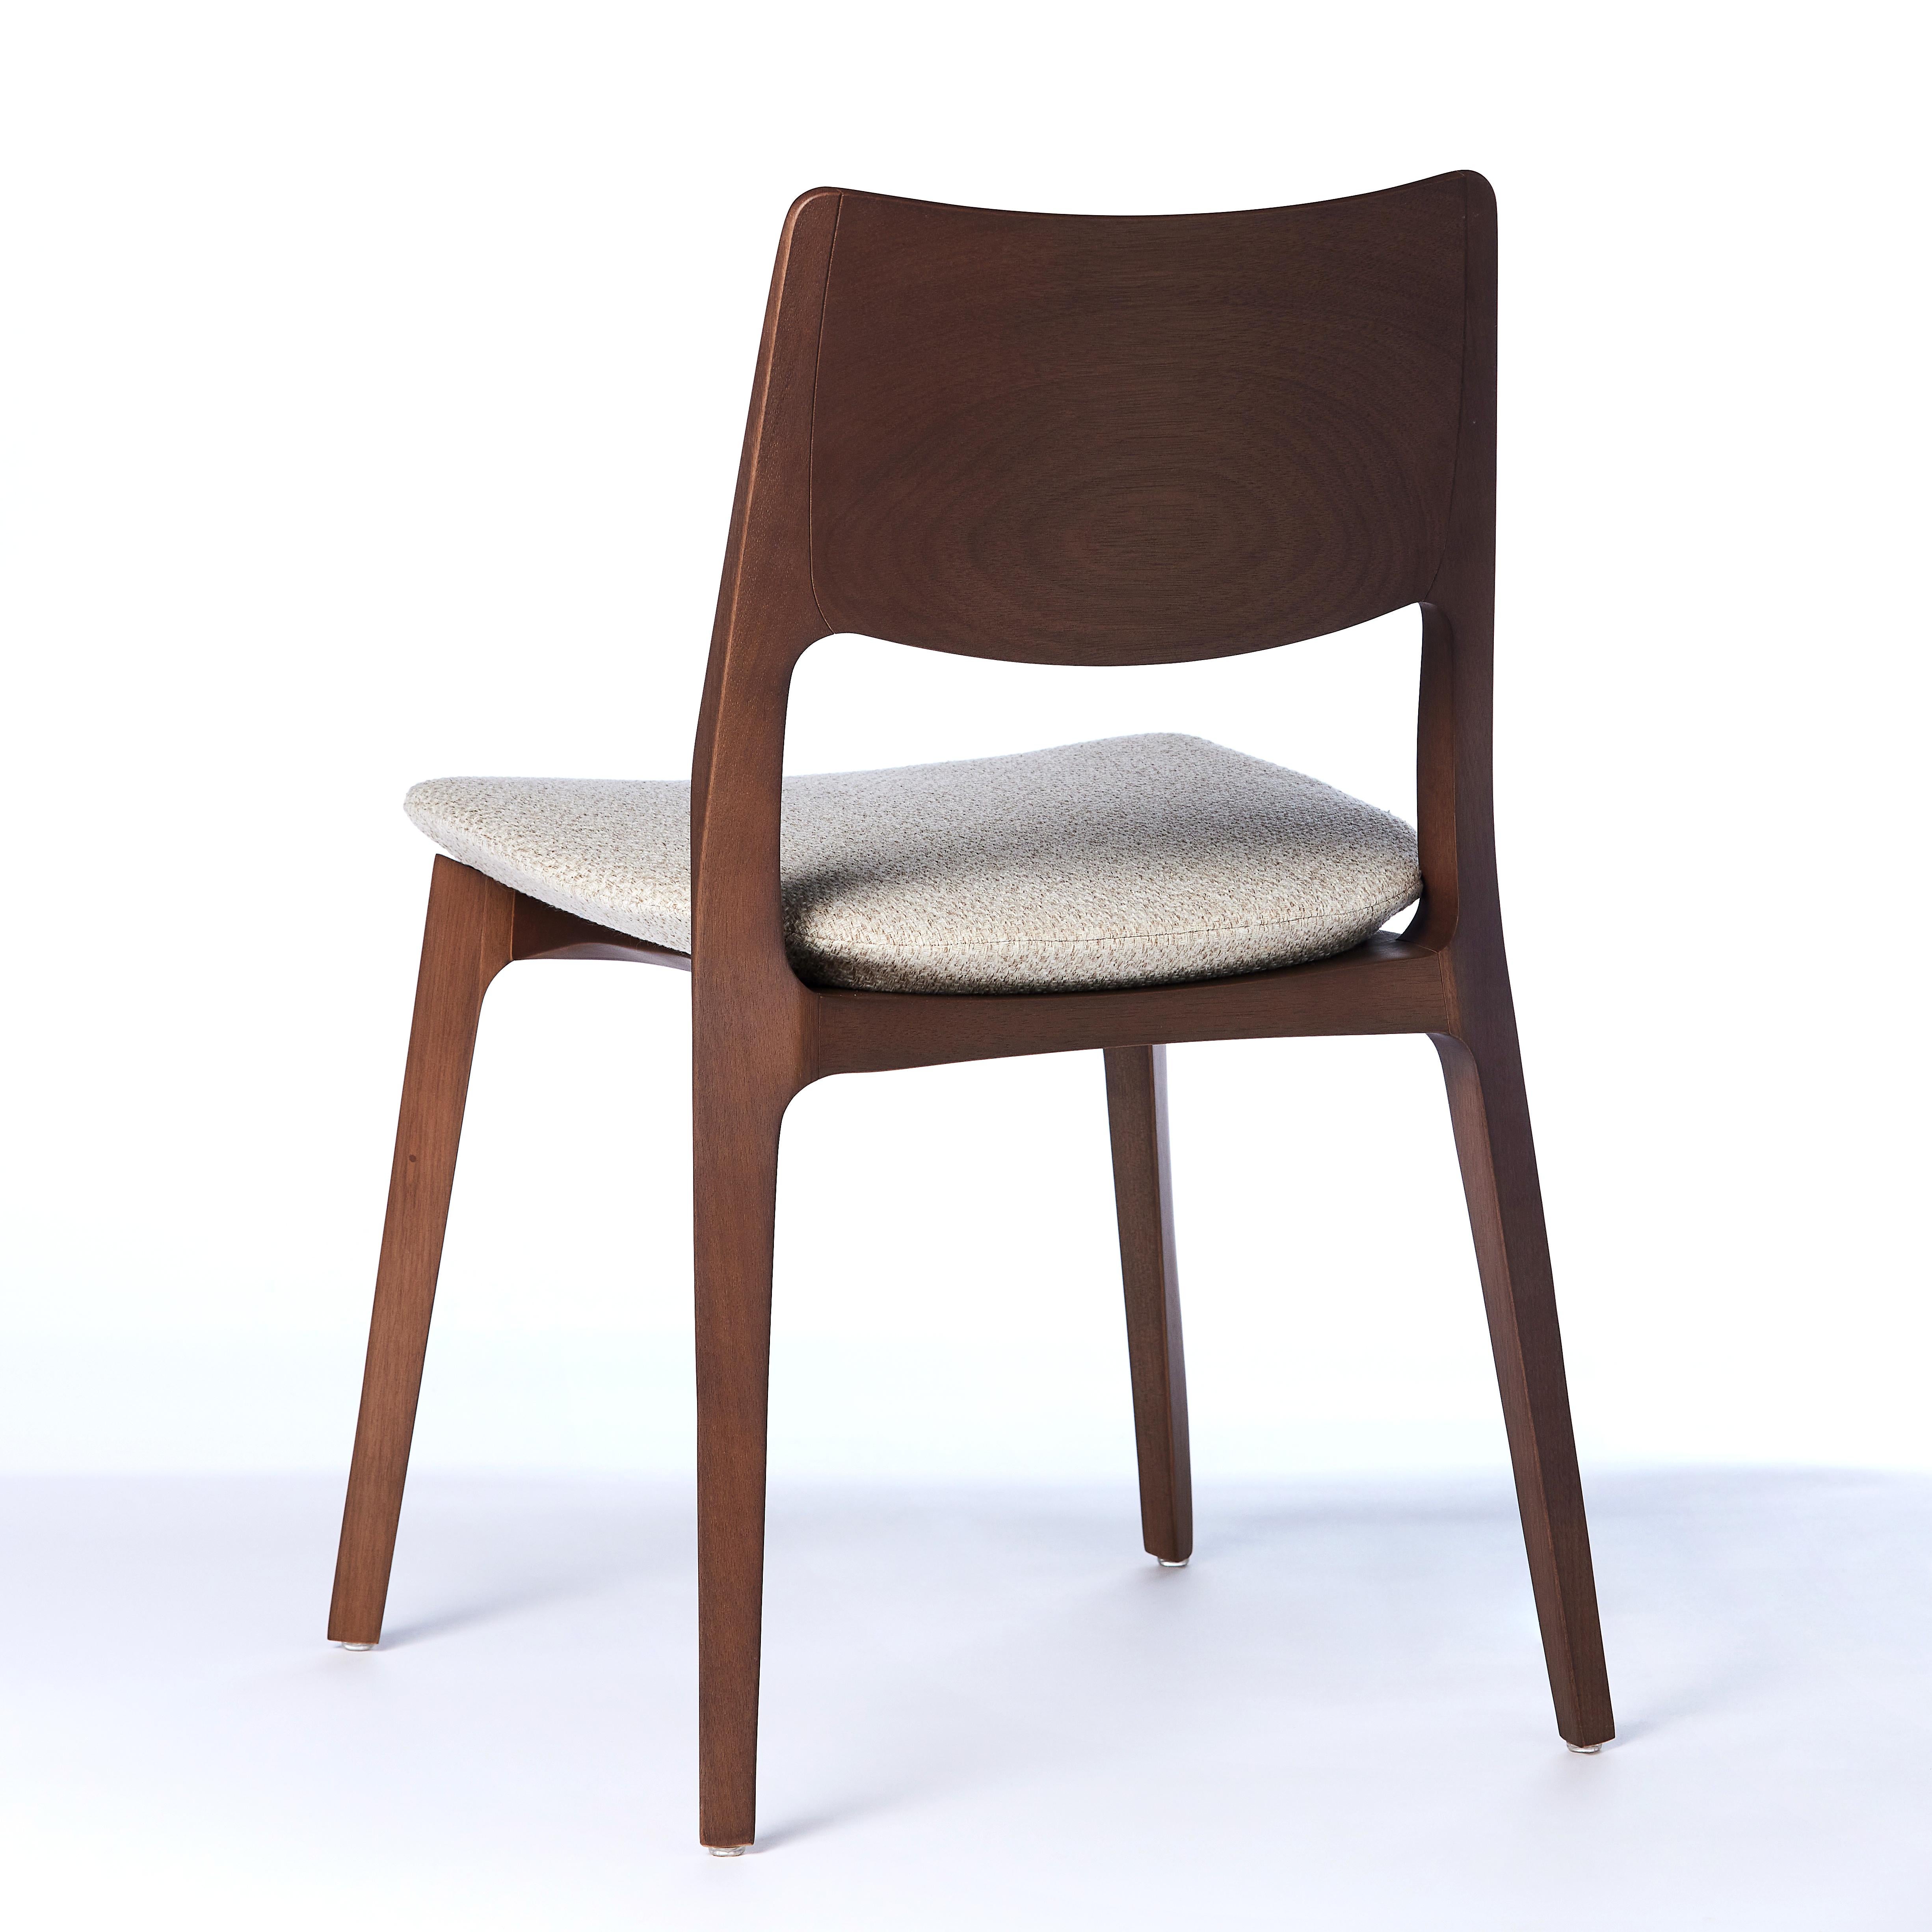 Brésilien The Moderns Aurora Chair Sculptured in Walnut Finish No Arms, Upholstering Seat en vente